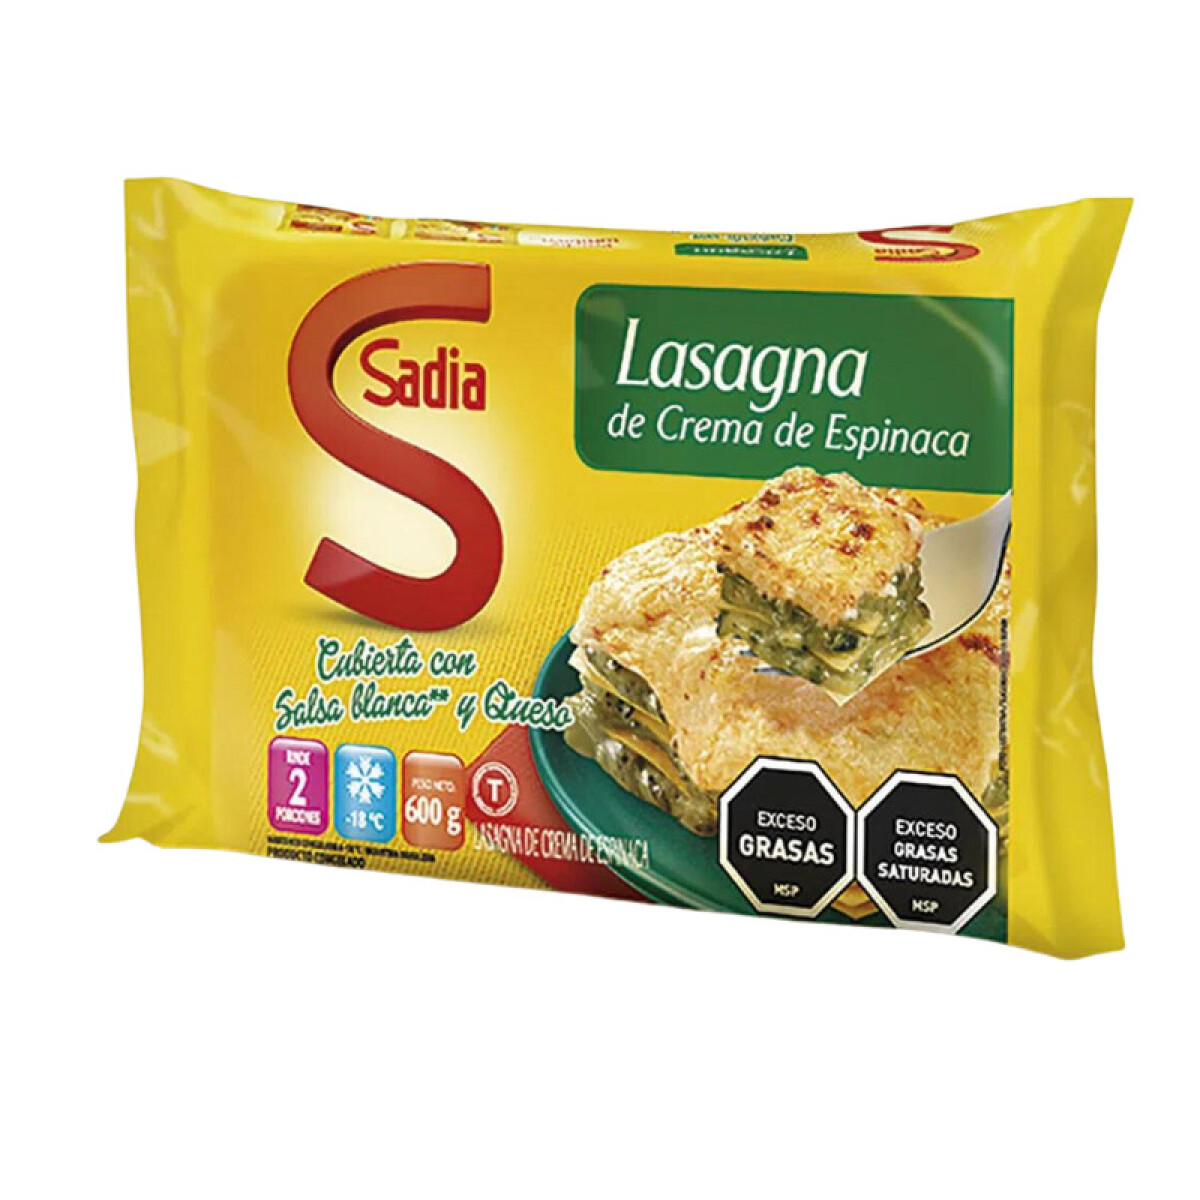 Lasagna crema espinaca Sadia - 600 grs 